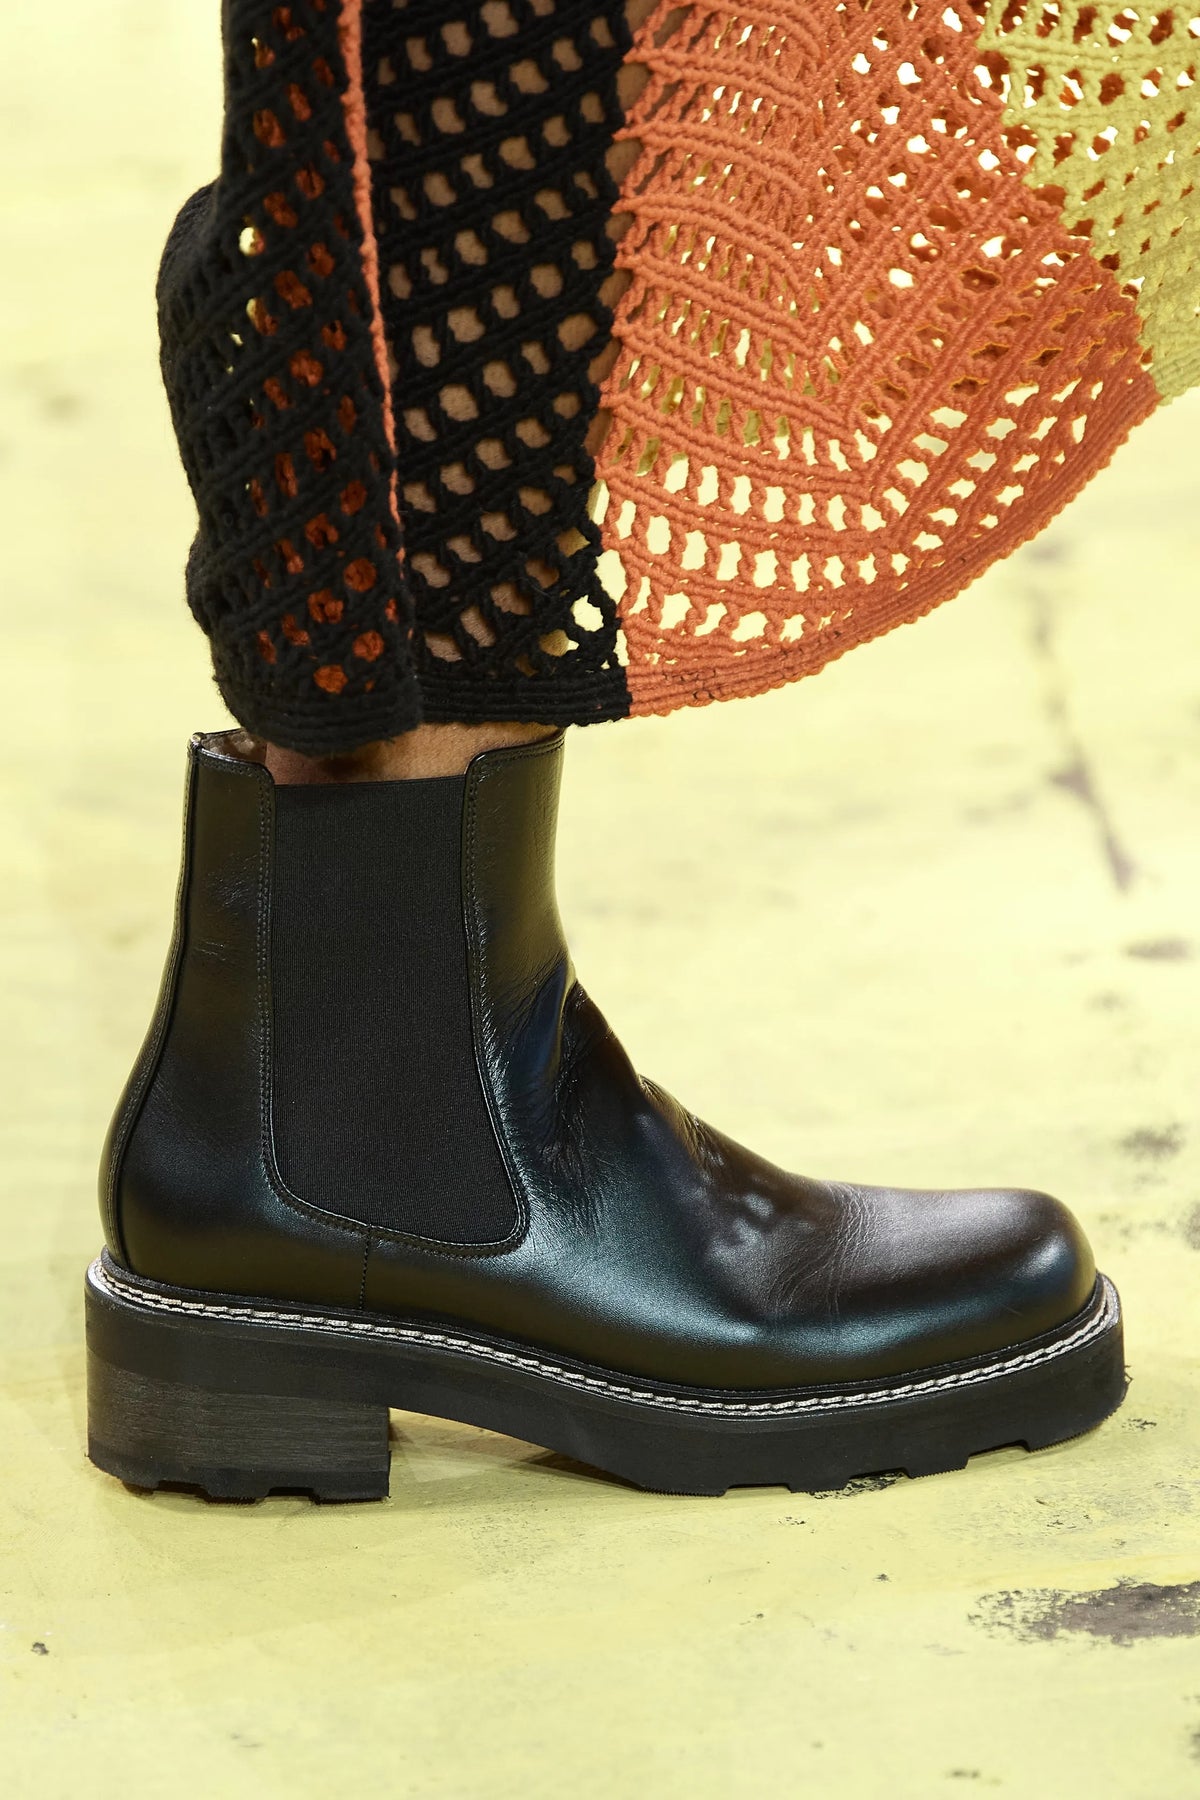 Jil Chelsea Boot in Black Leather